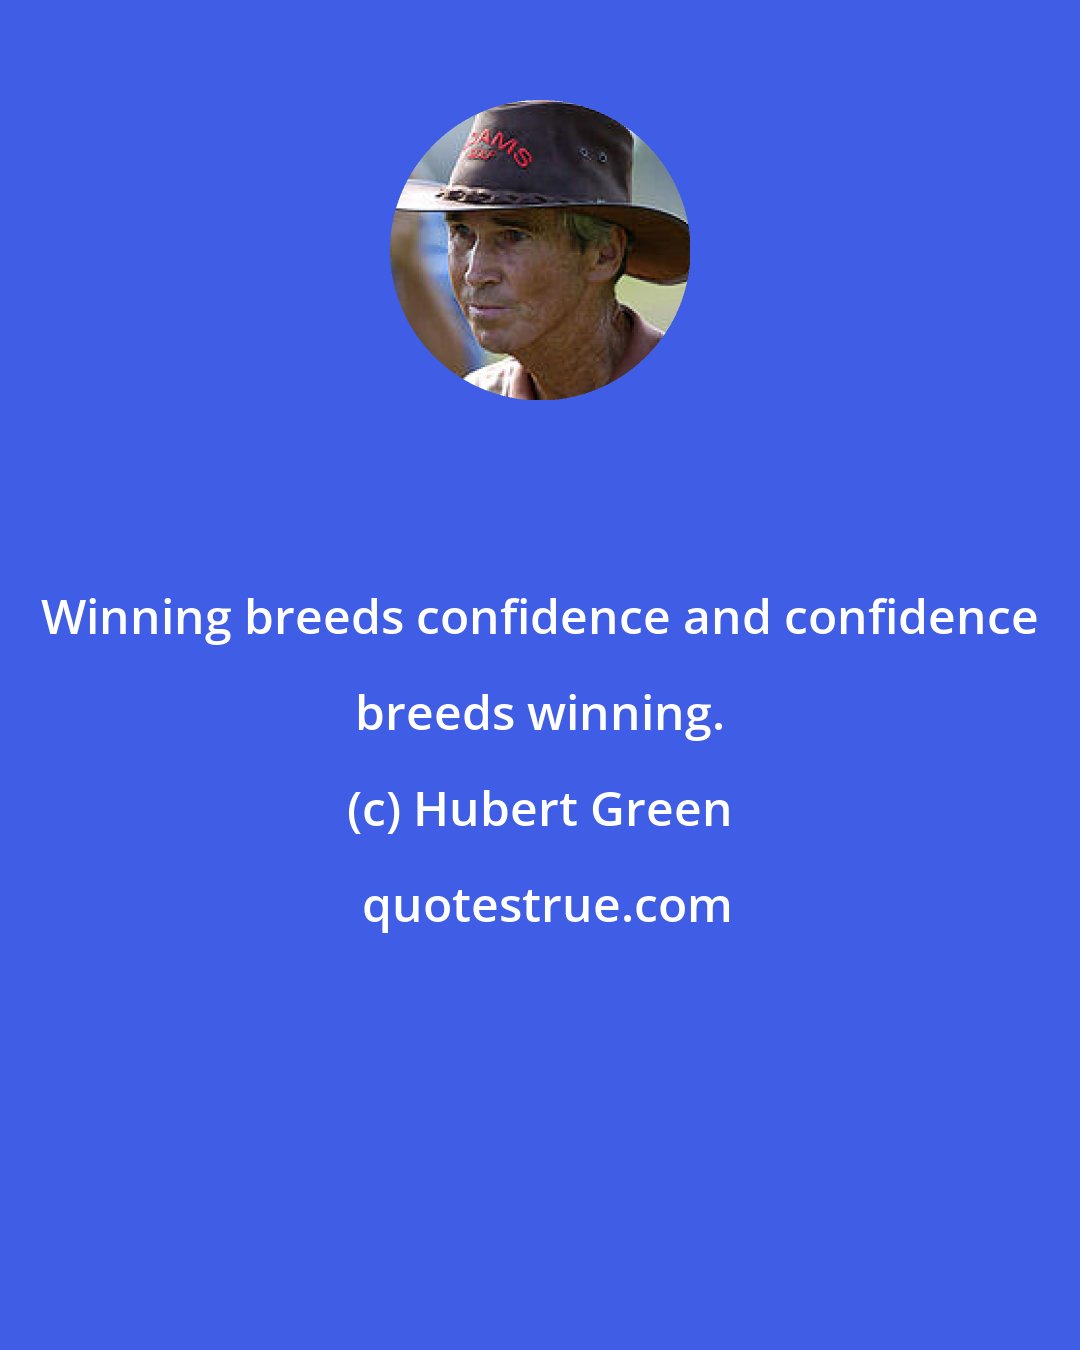 Hubert Green: Winning breeds confidence and confidence breeds winning.